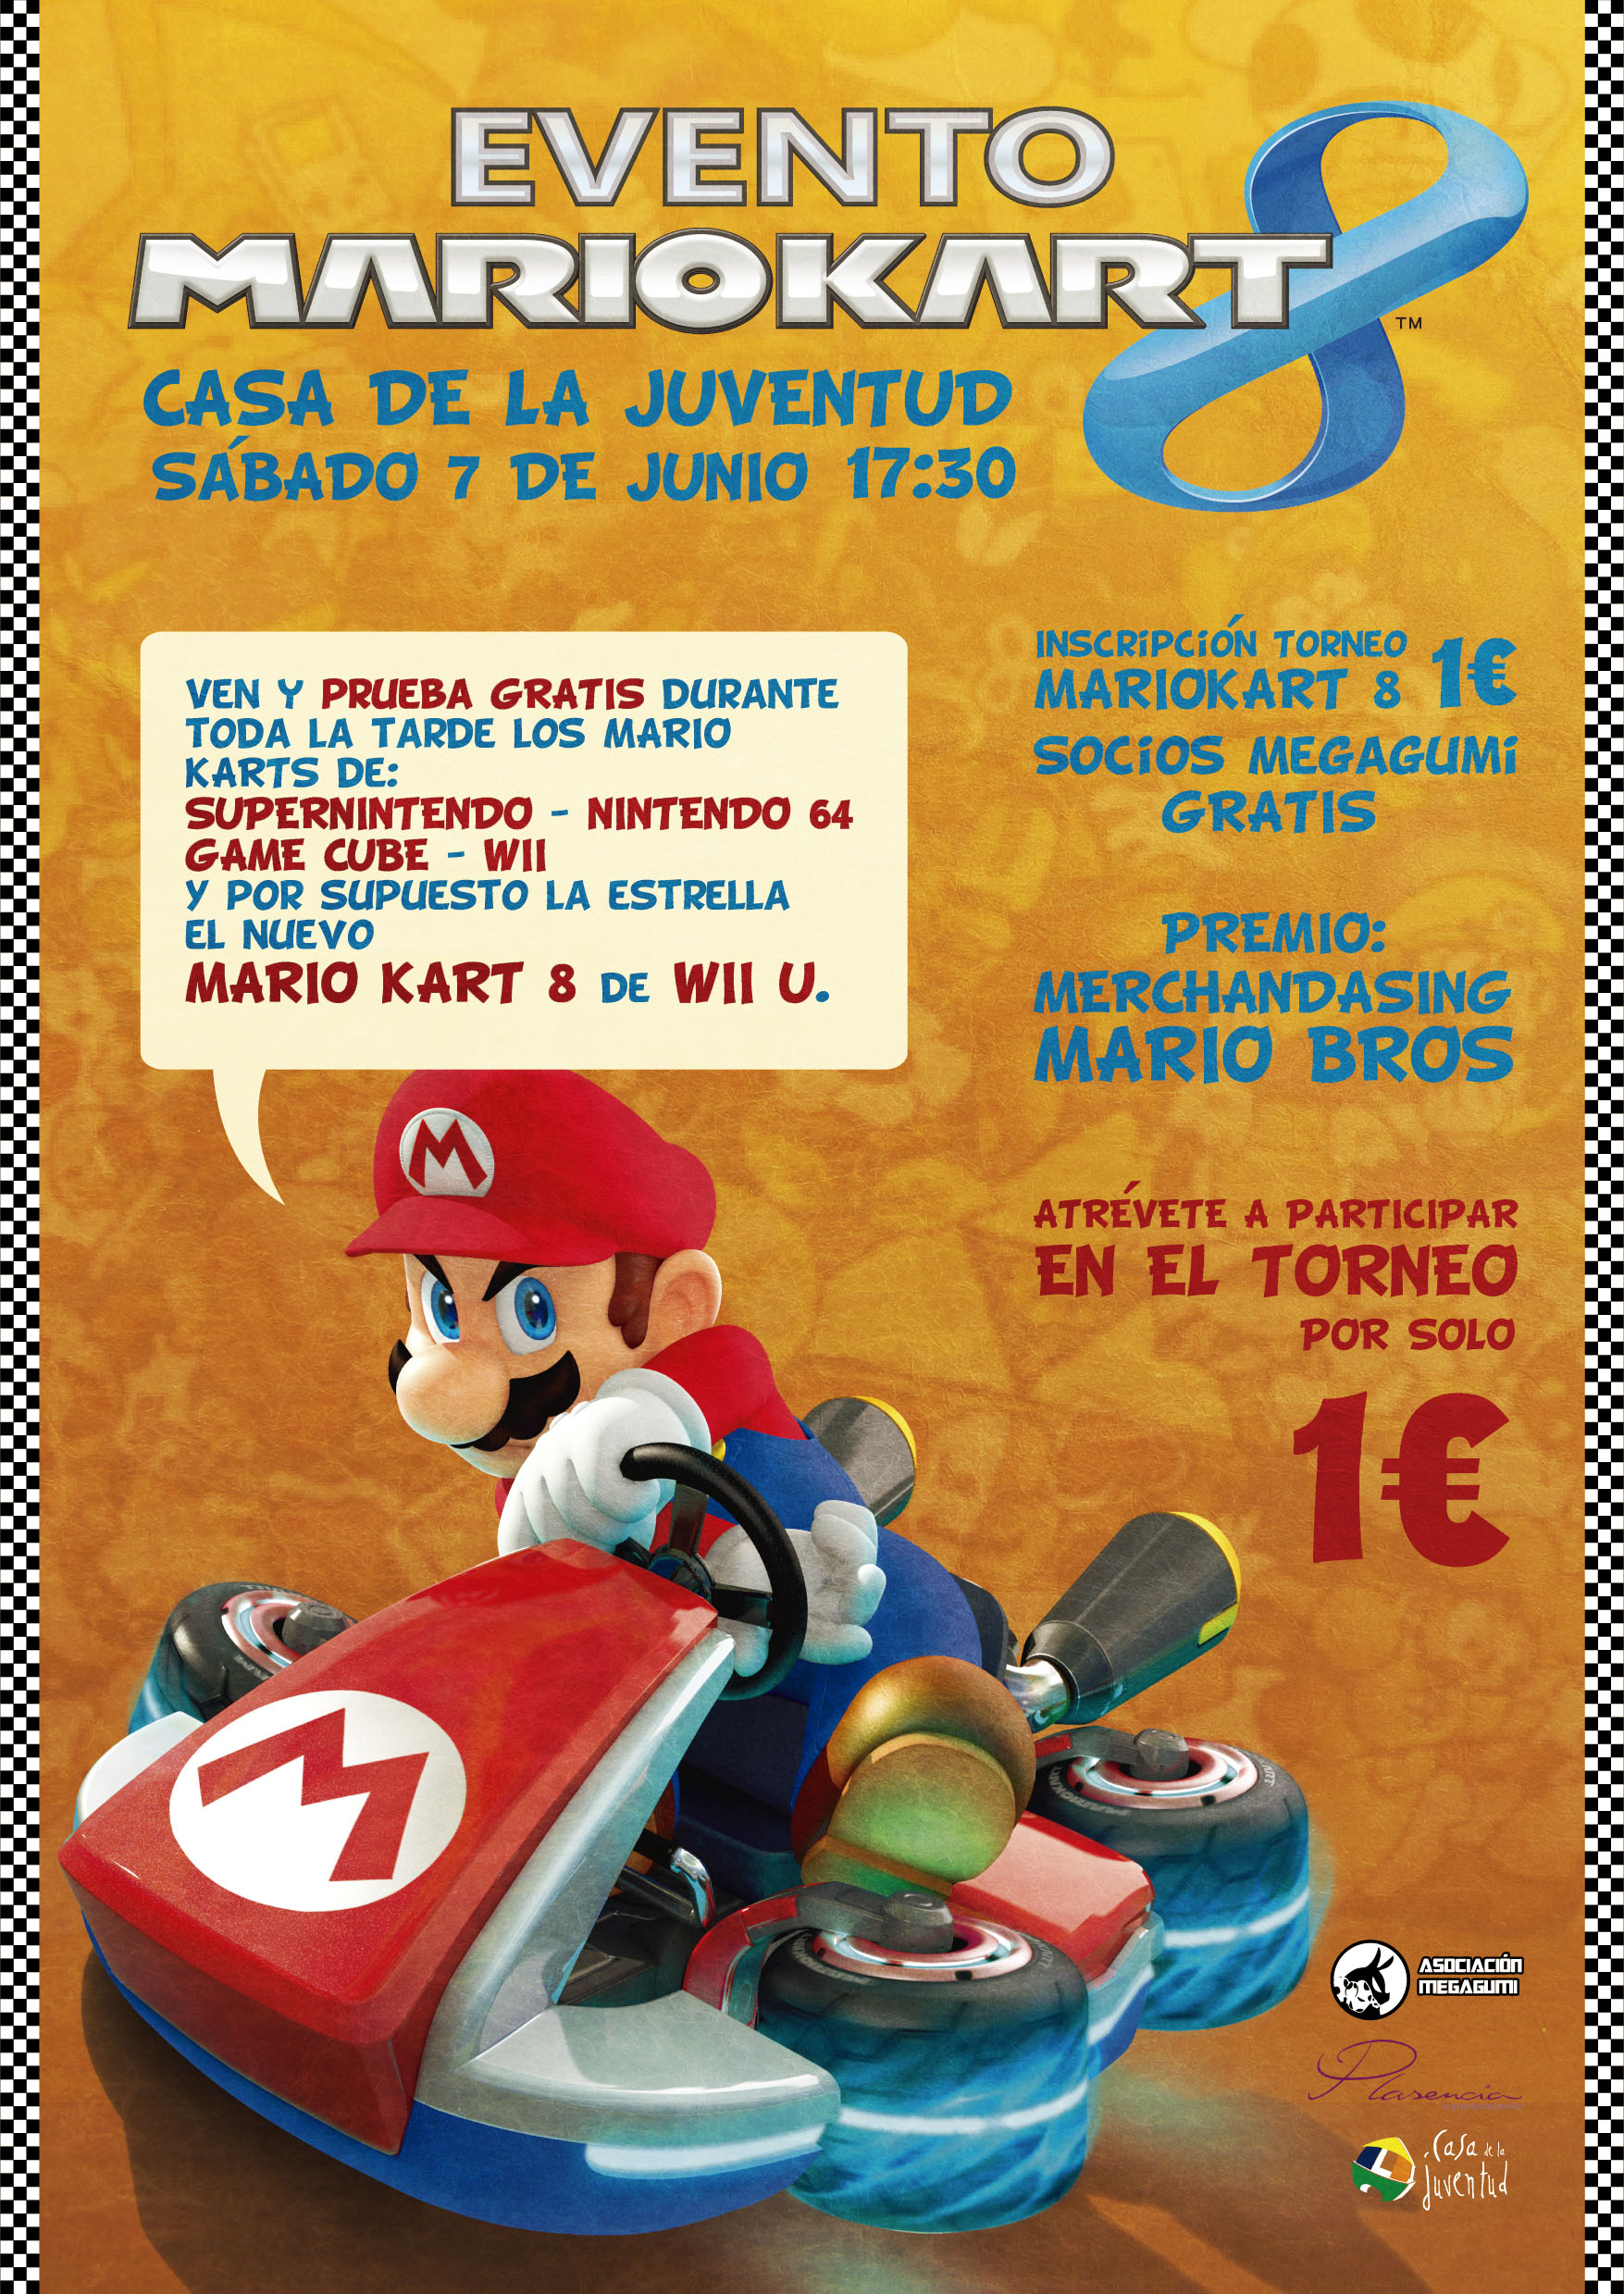 Evento Mario Kart 8 Wii U